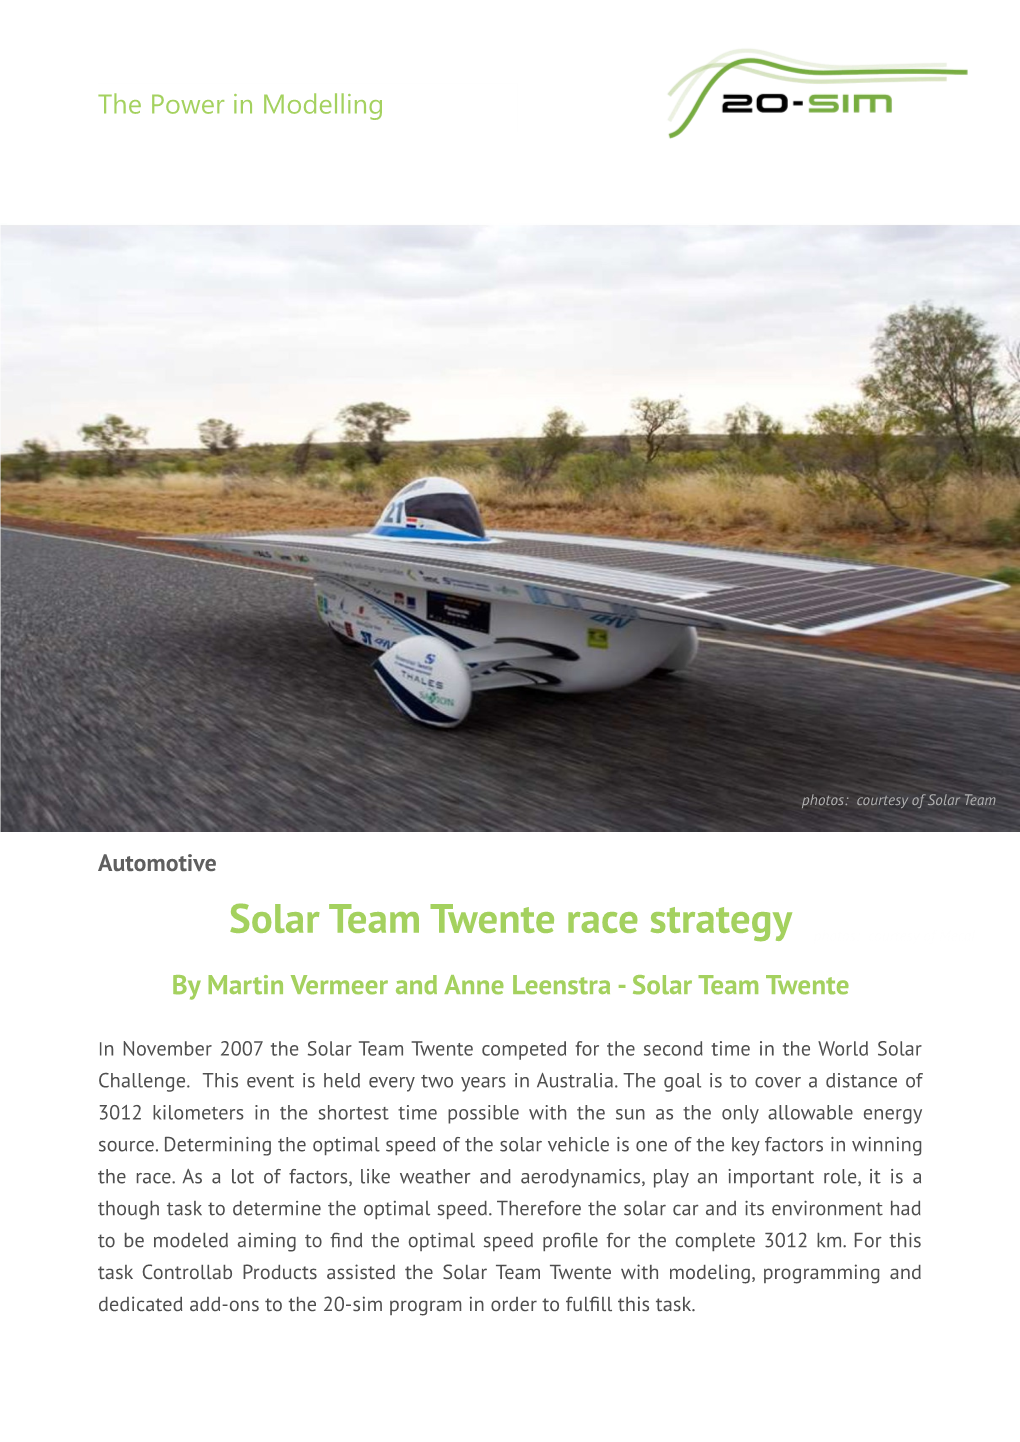 Solar Team Twente Race Strategy Photos: Courtesy of Mecal